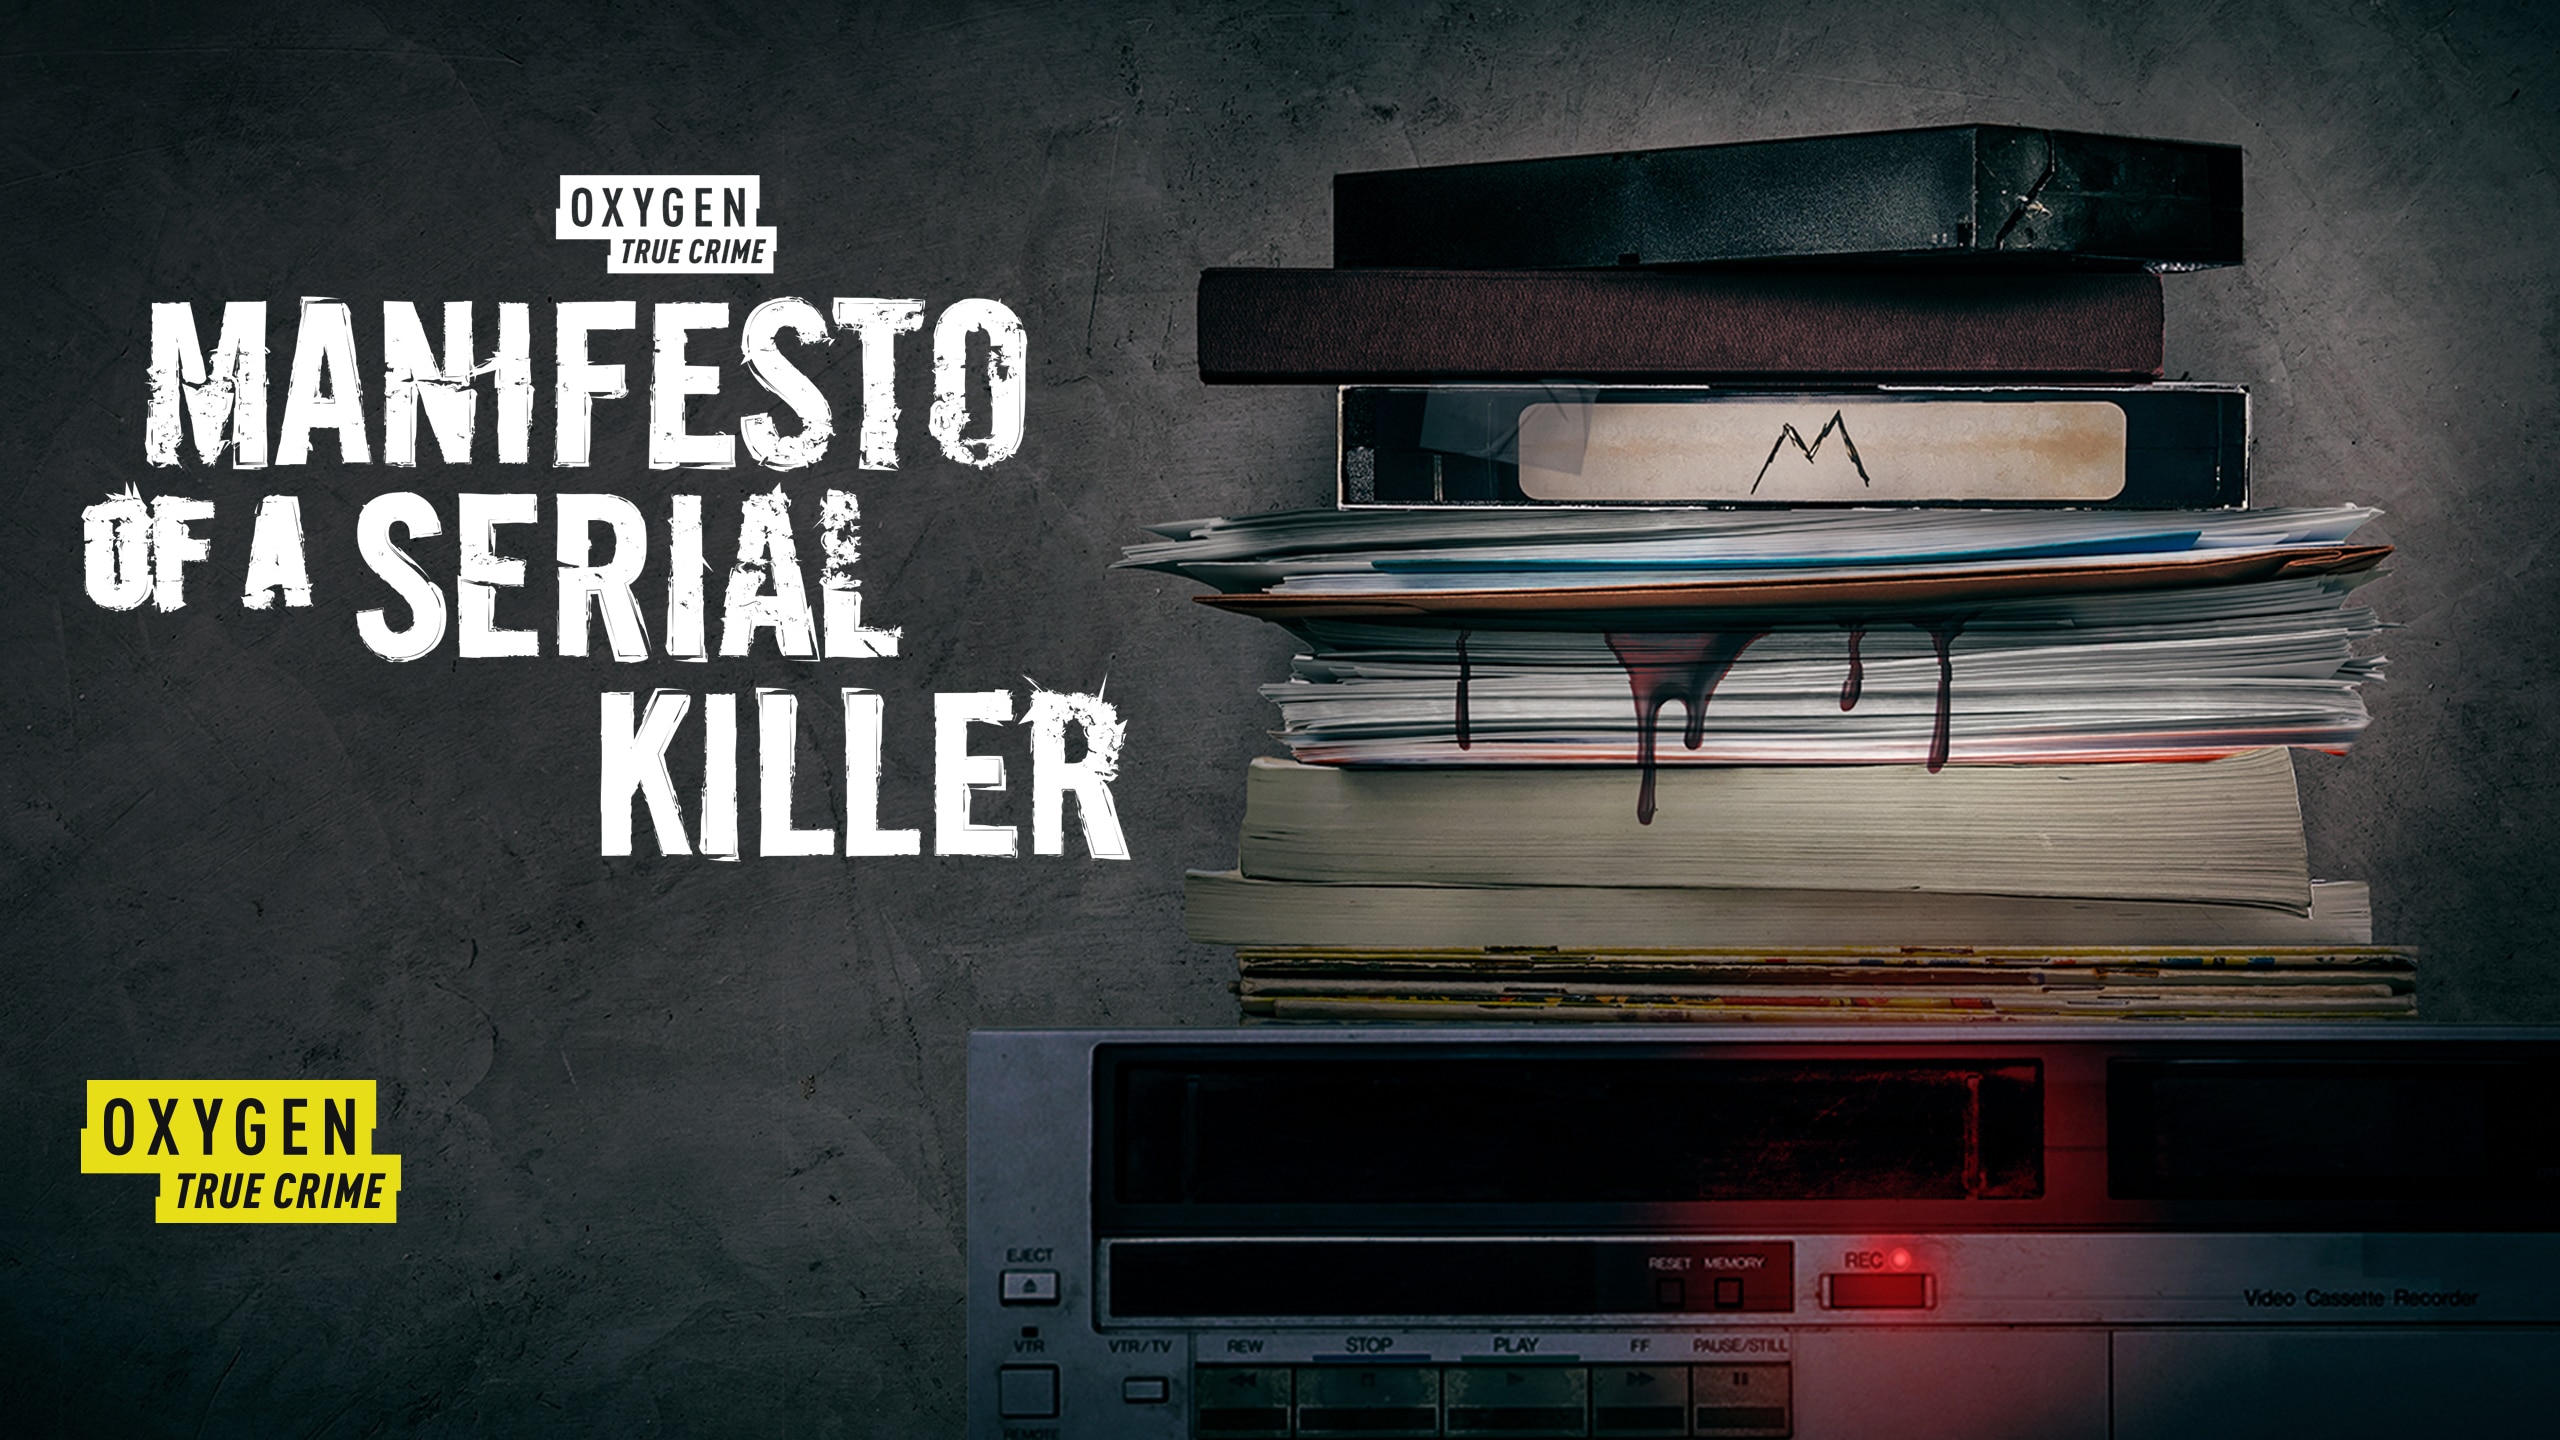 Oxygen True Crime Manifesto Of A Serial Killer 0 Keyart 72 Dpi 2560 X 1440 16 9 No Tune In 1